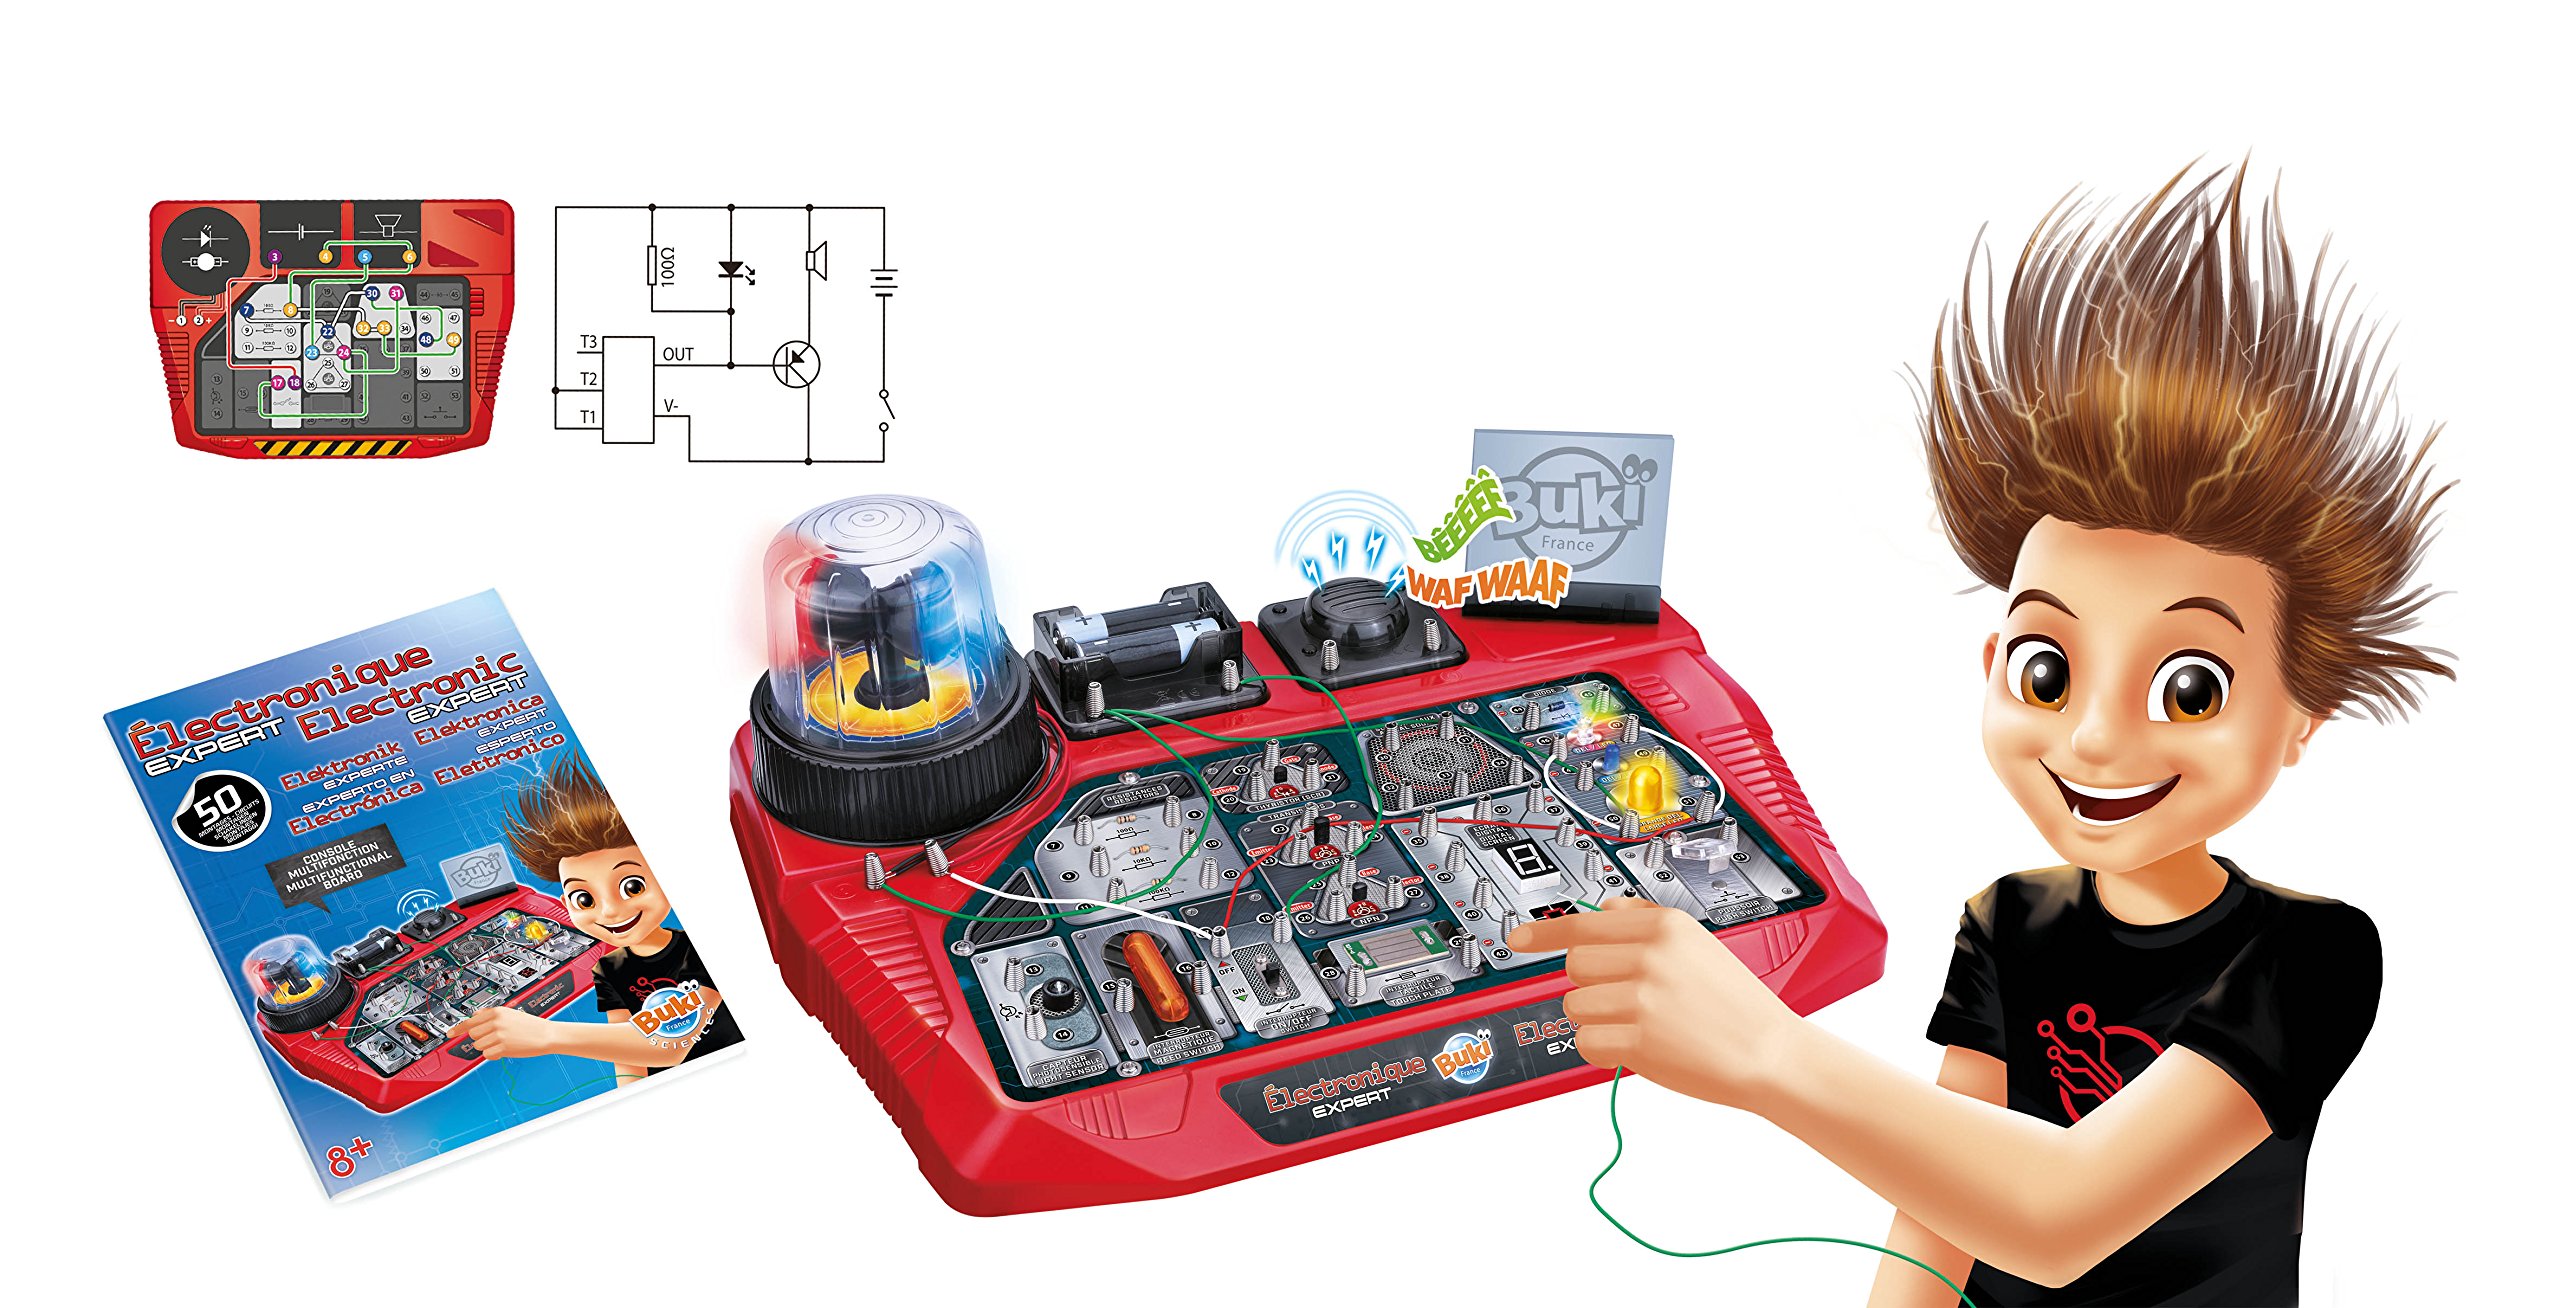 Buki France Electronics Expert Educational Toy